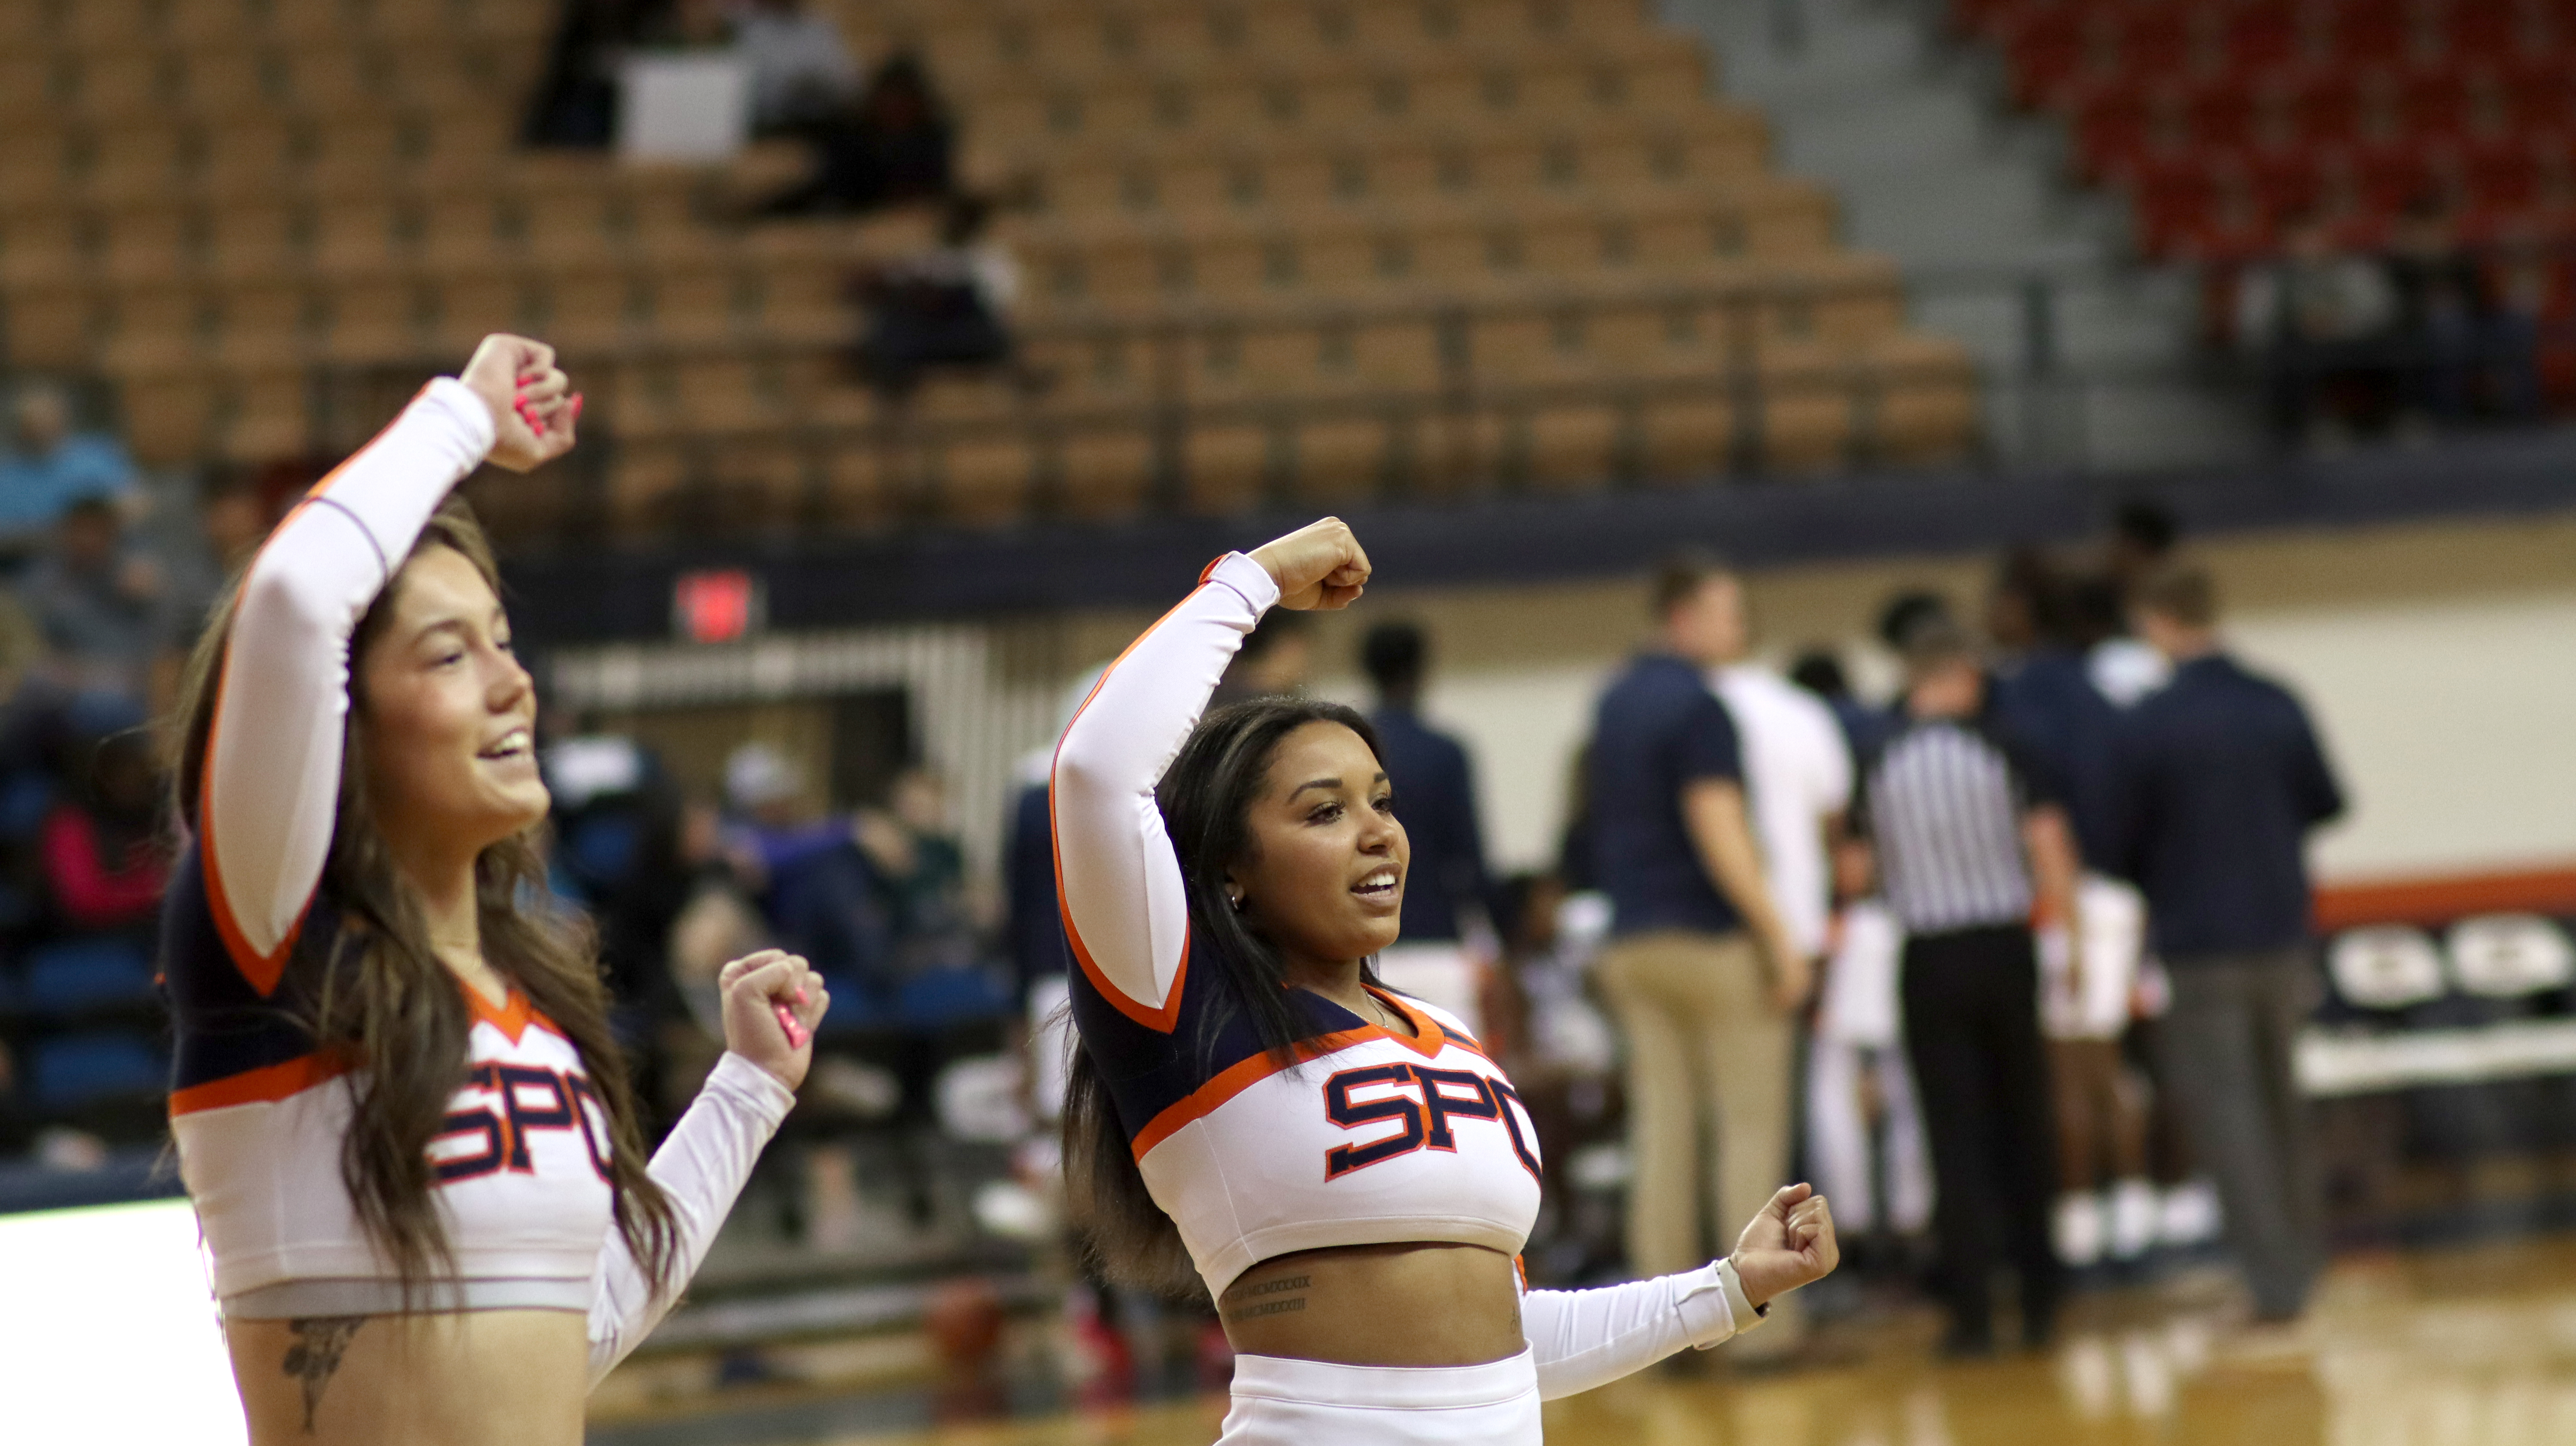 Cheerleaders bring hype to SPC events